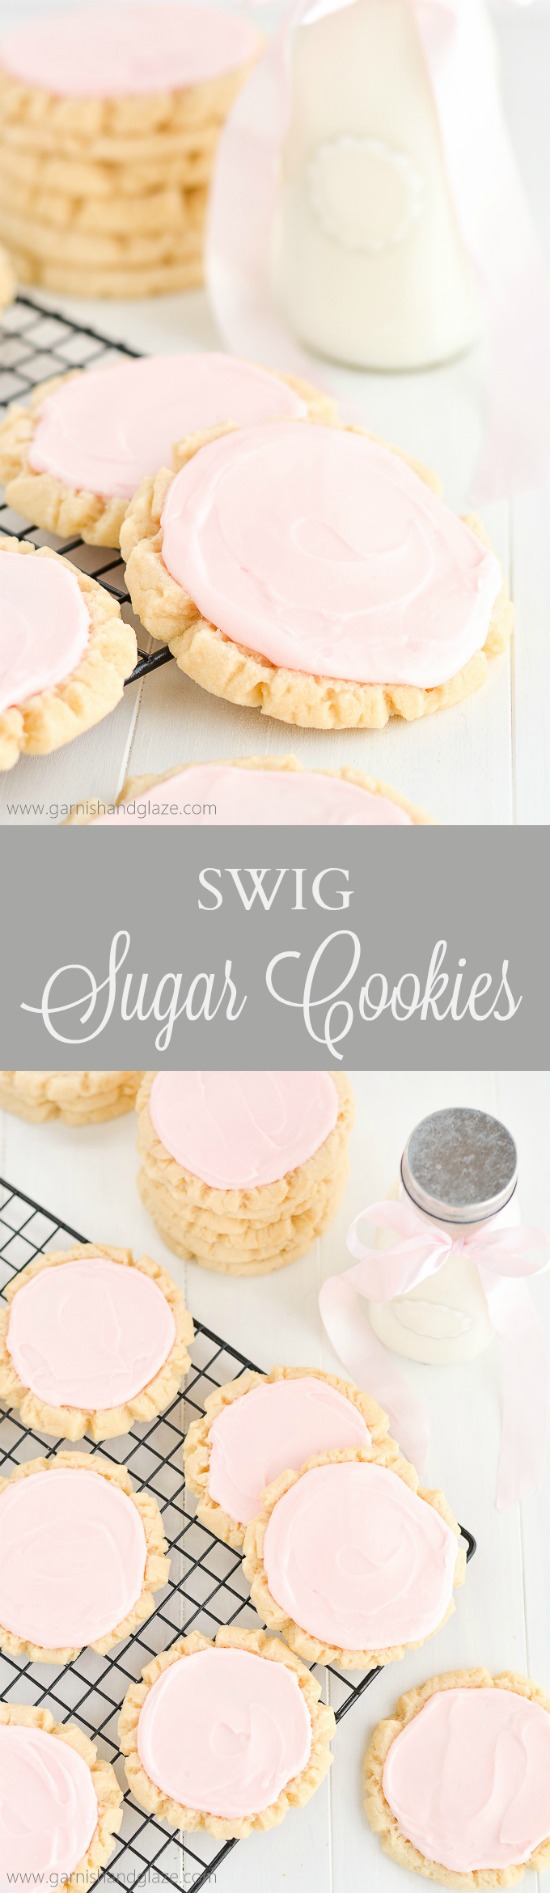 Swig Sugar Cookies - Garnish & Glaze